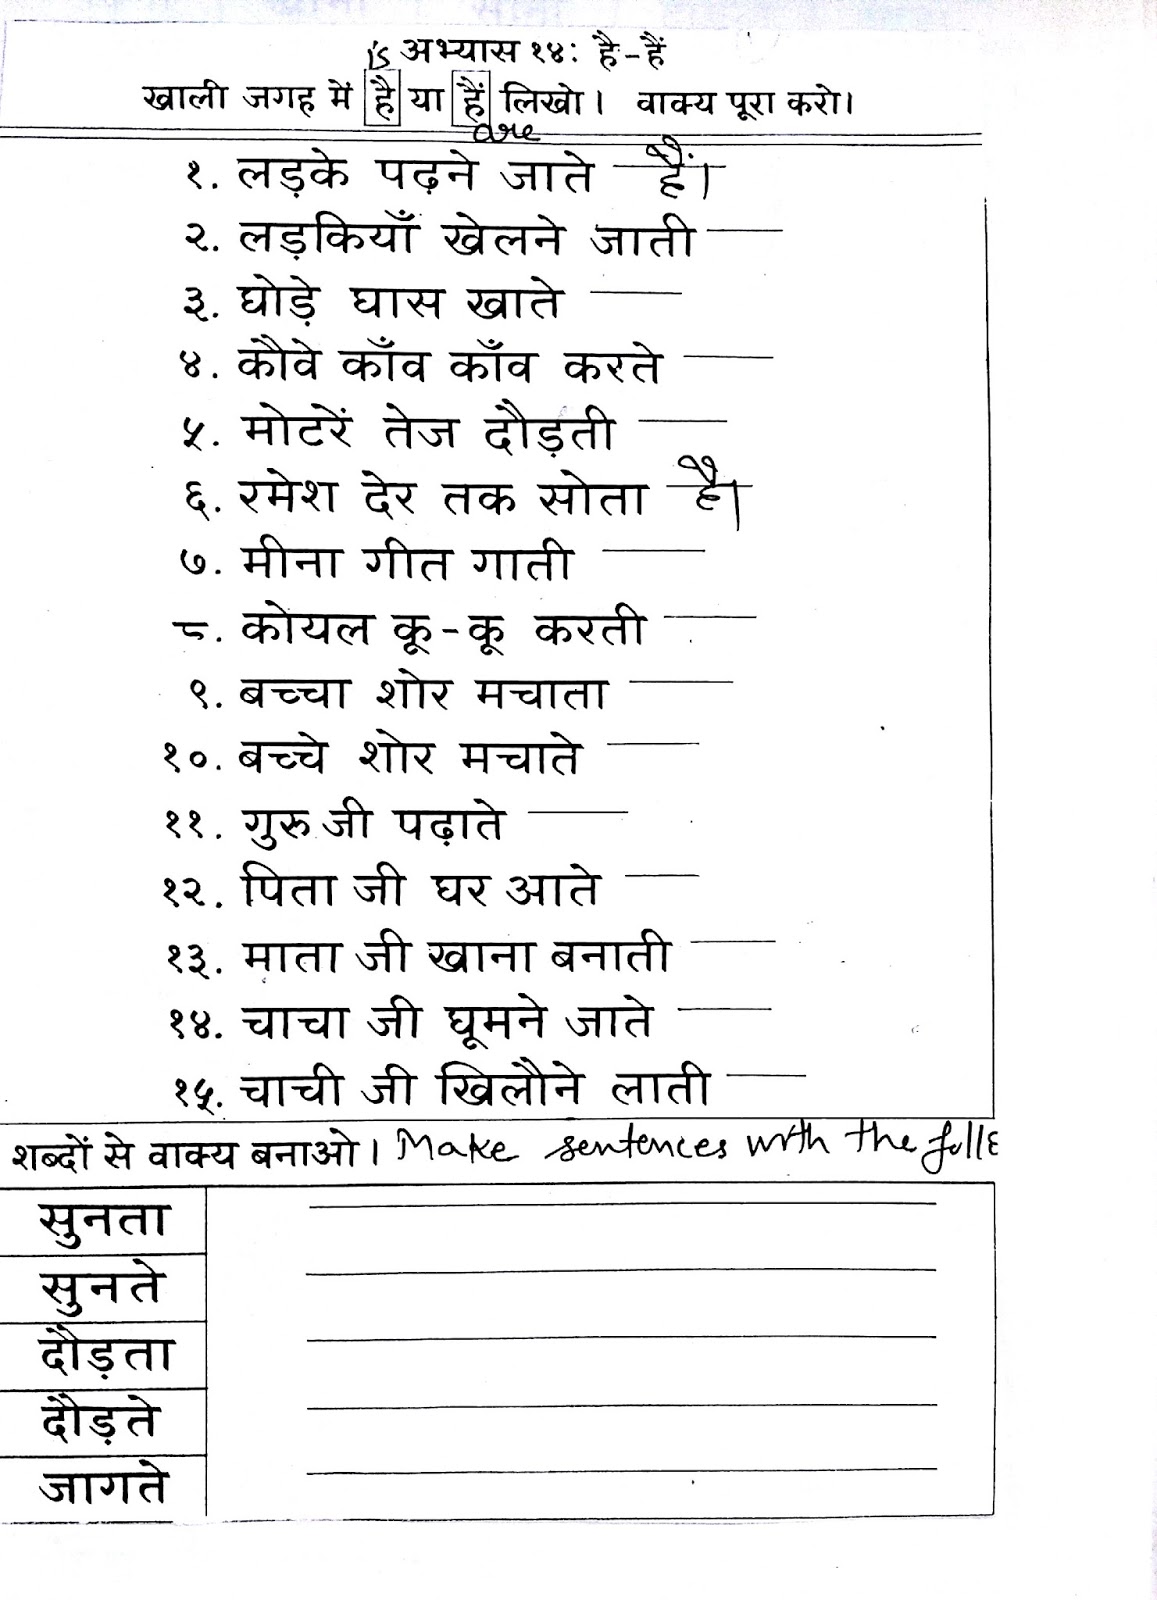 Hindi Grammar Work Sheet Collection For Classes 5 6 7 8 Tenses Work Sheets For Classes 3 4